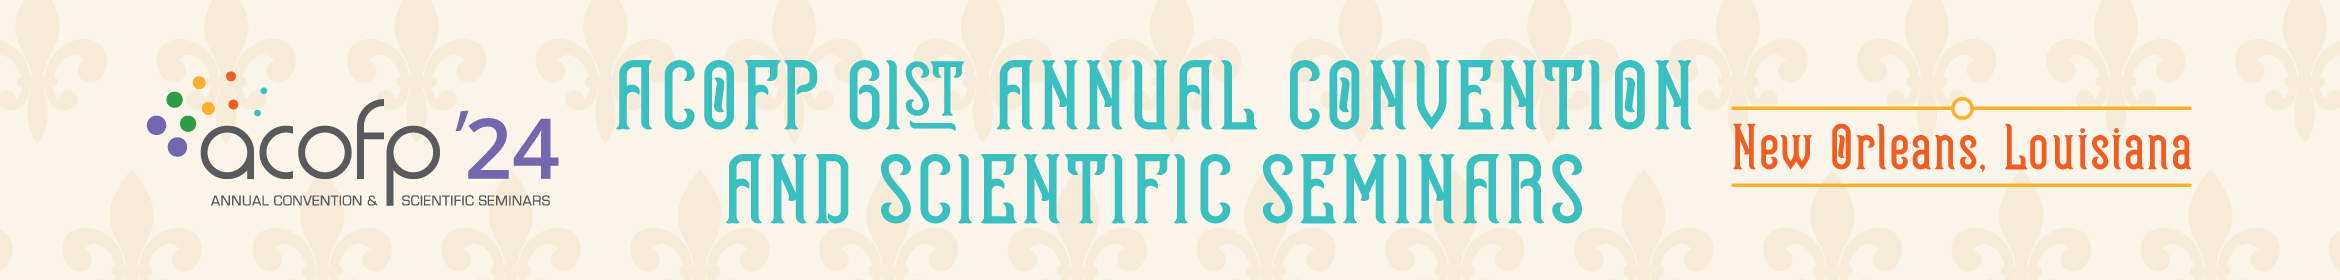 ACOFP 61 Annual Convention and Scientific Seminars Main banner